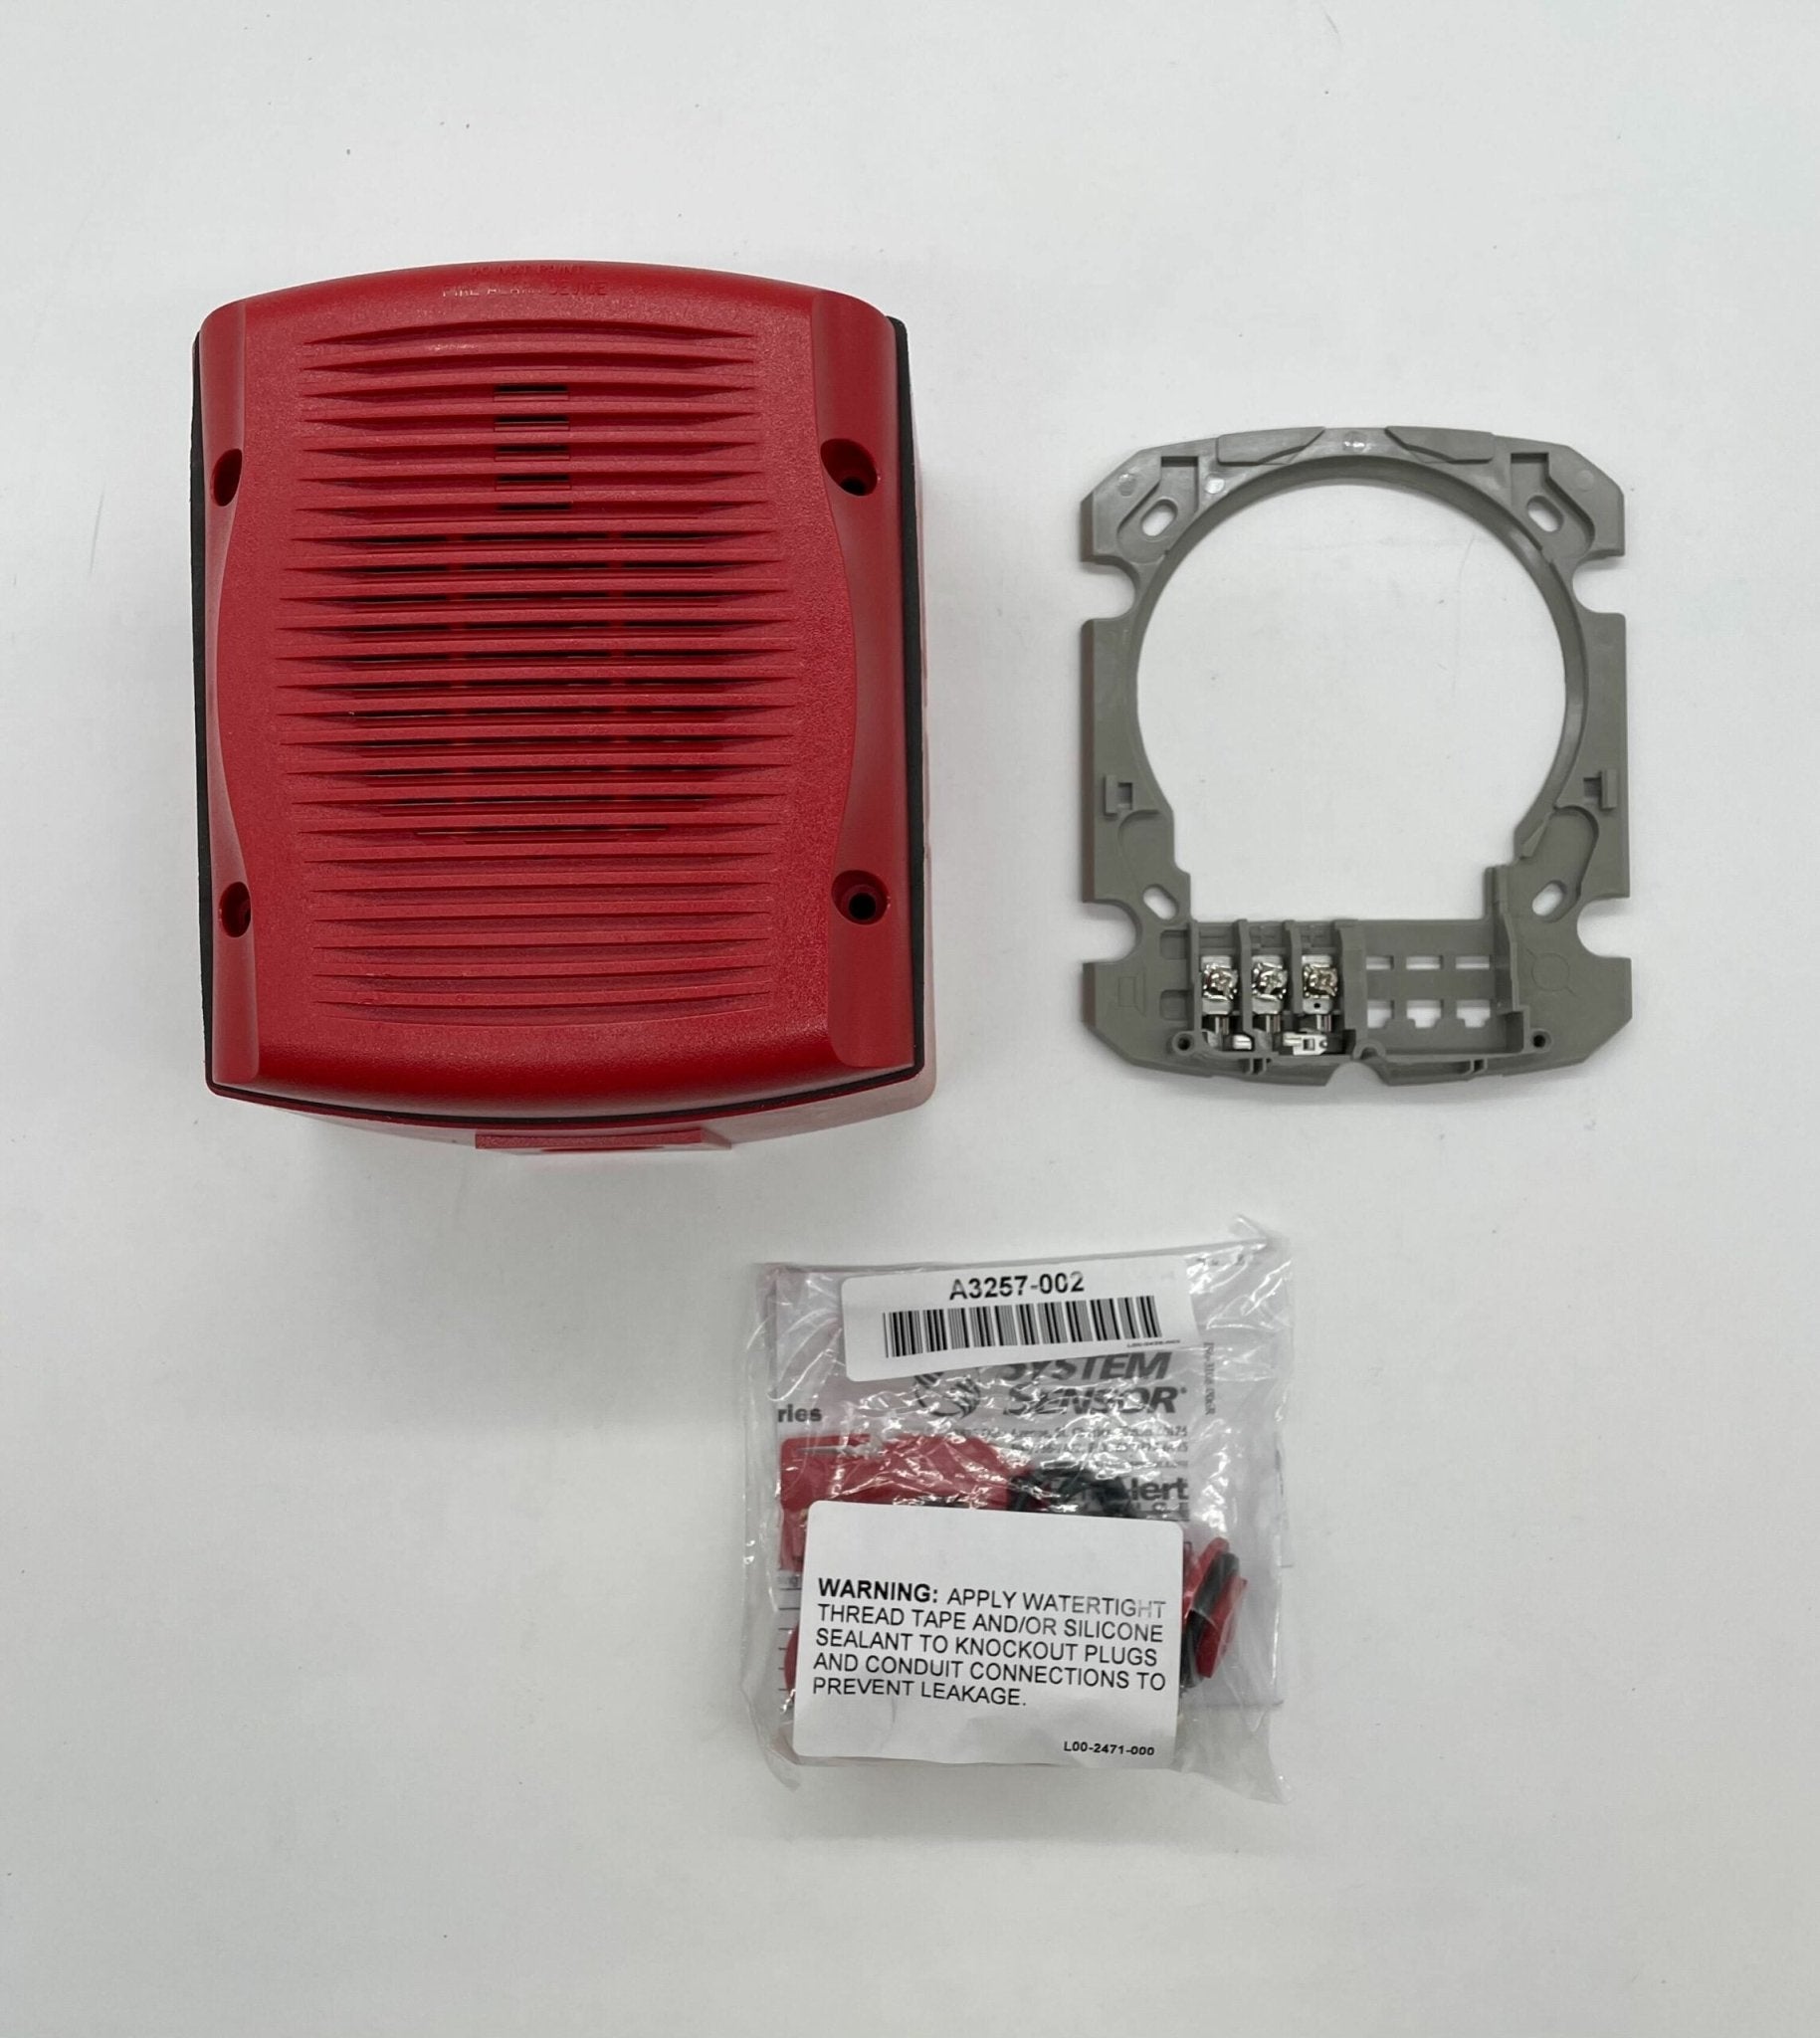 System Sensor SPRK - The Fire Alarm Supplier